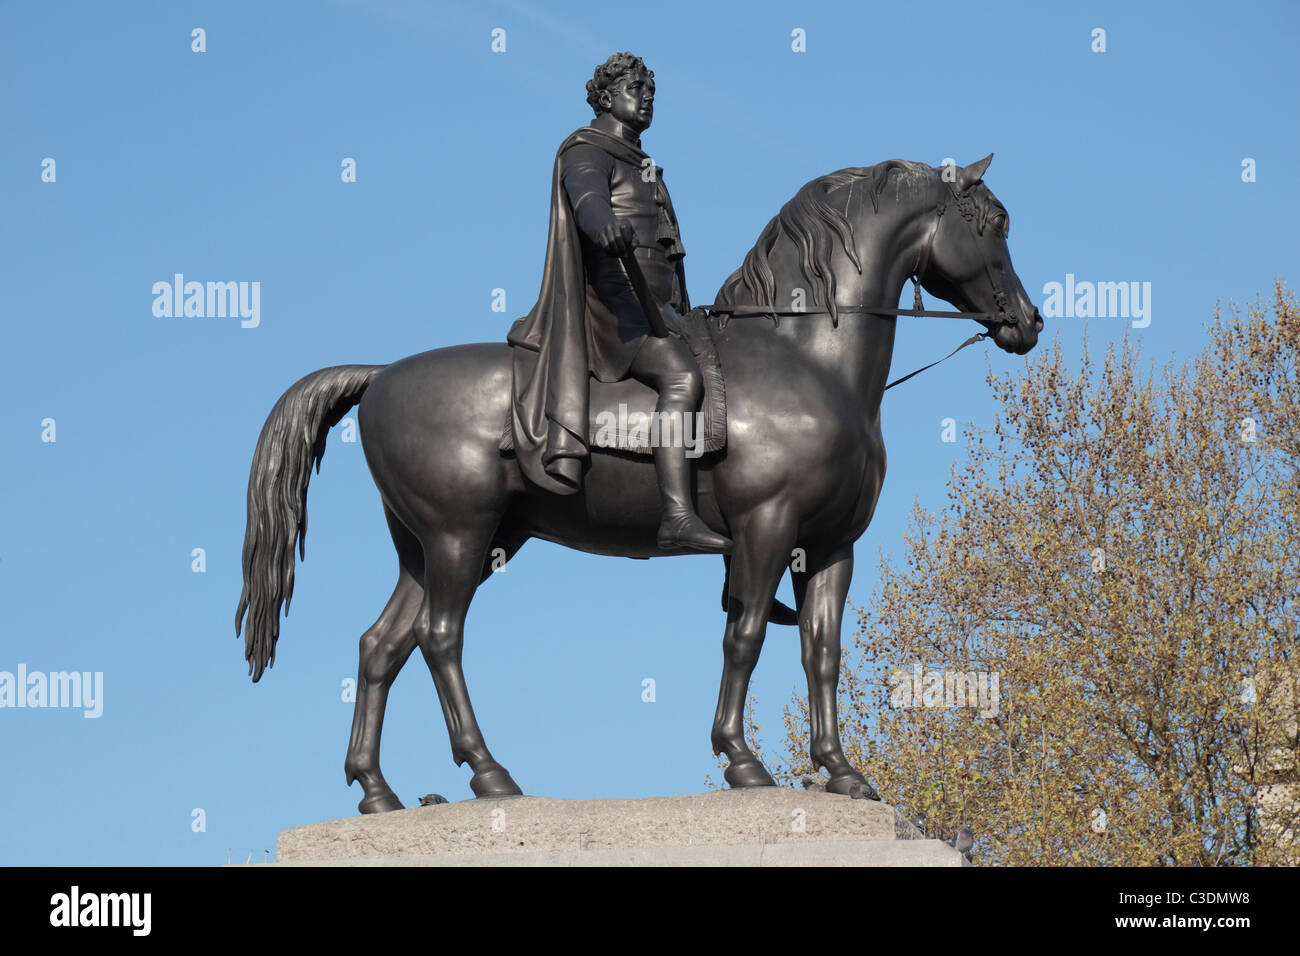 Statue of King George IV on horseback on a plinth in Trafalgar Square, London, UK. Stock Photo